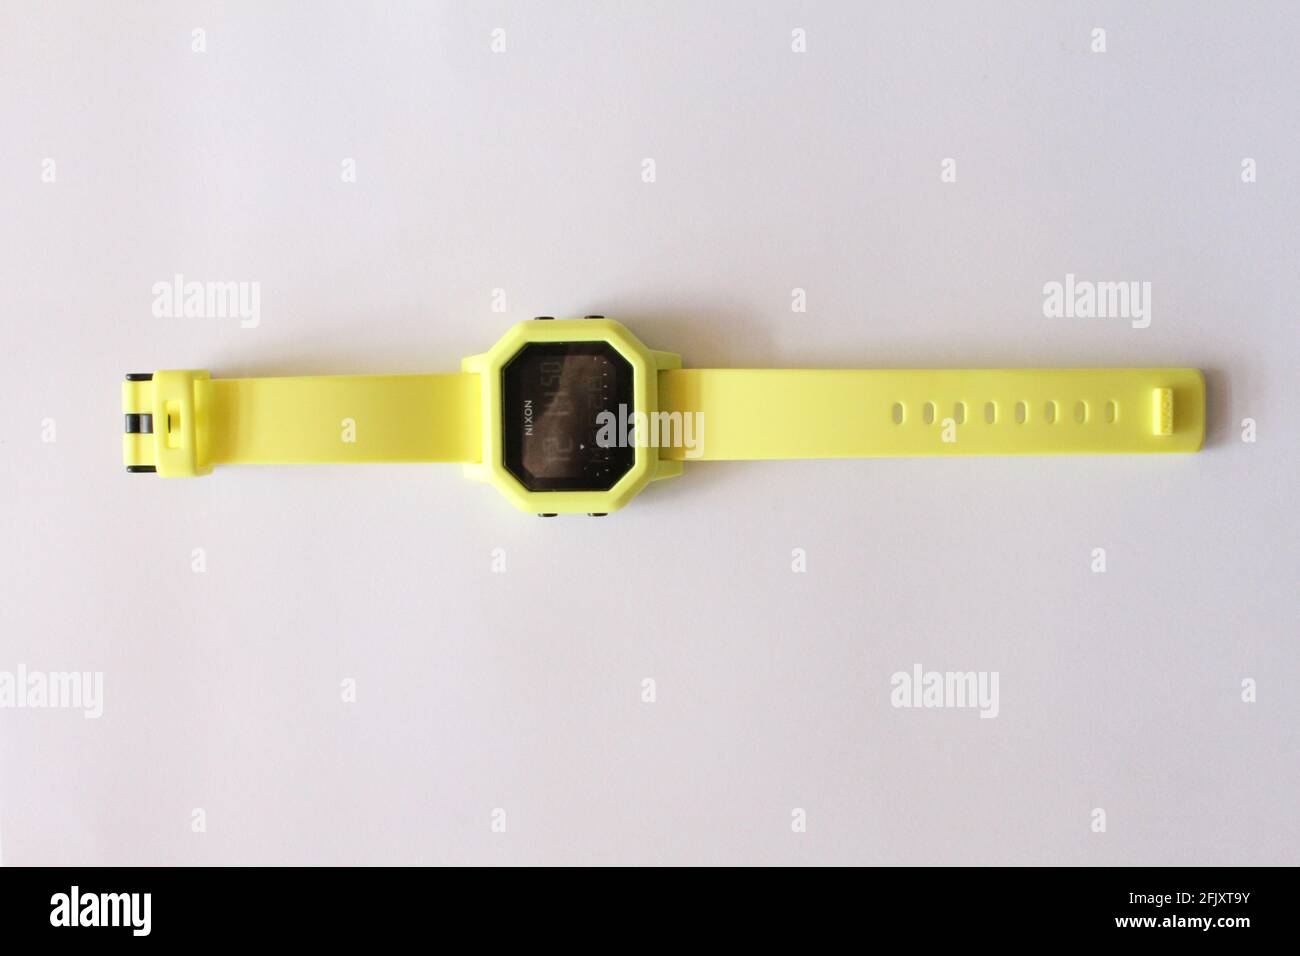 Nixon Neon Wrist Watch, Digital, on a white flat surface Stock Photo